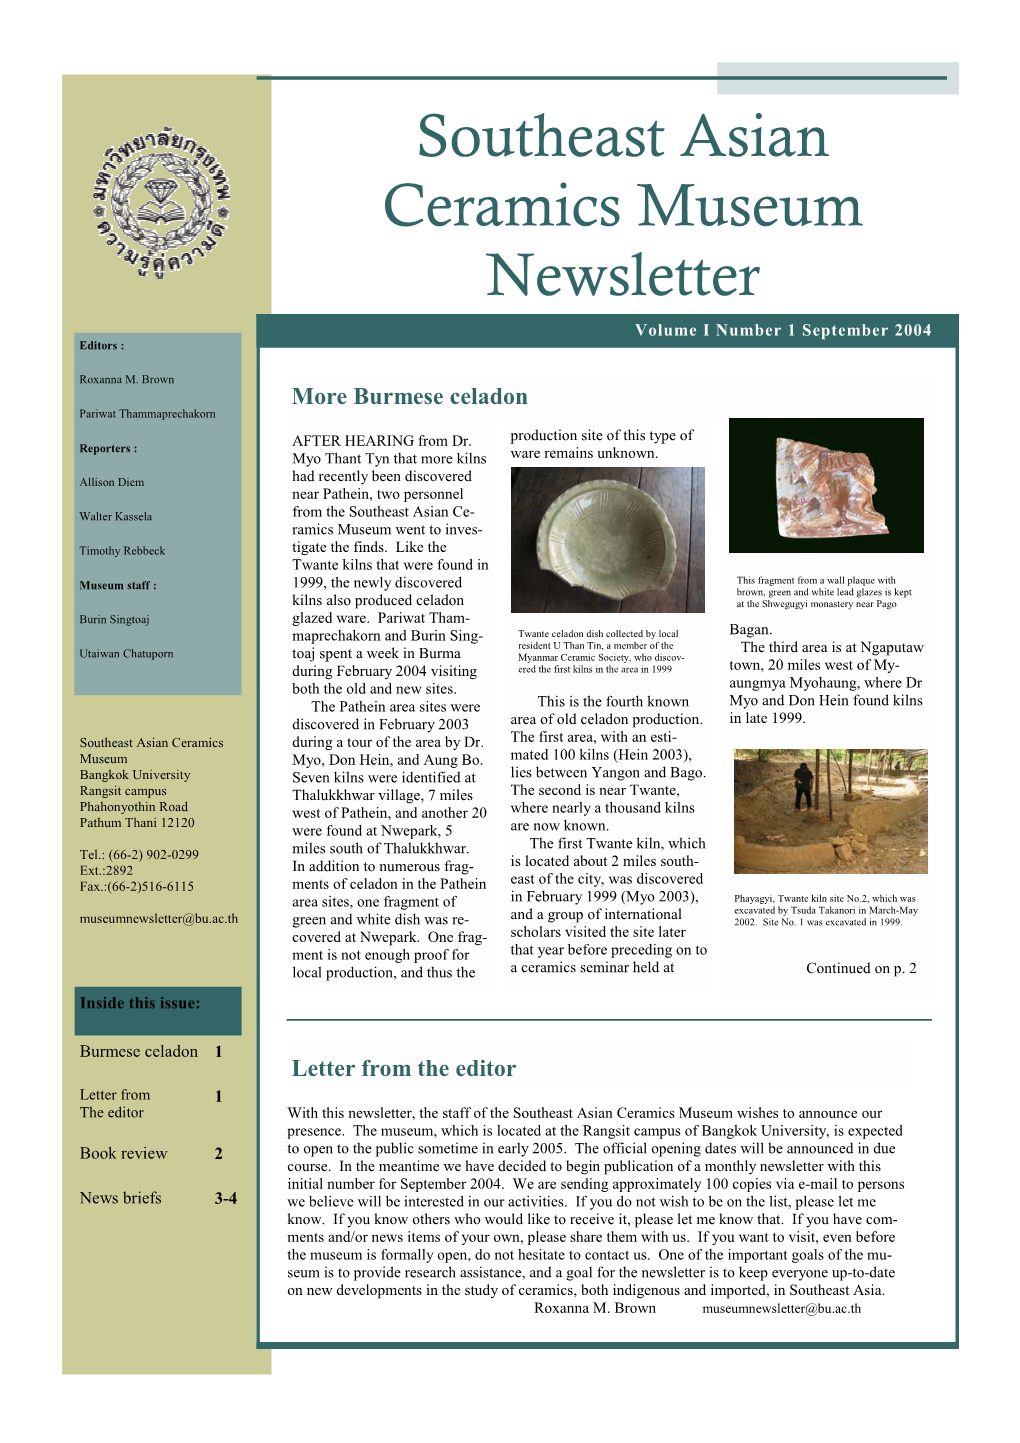 Southeast Asian Ceramics Museum Newsletter Volume I Number 1 September 2004 Editors